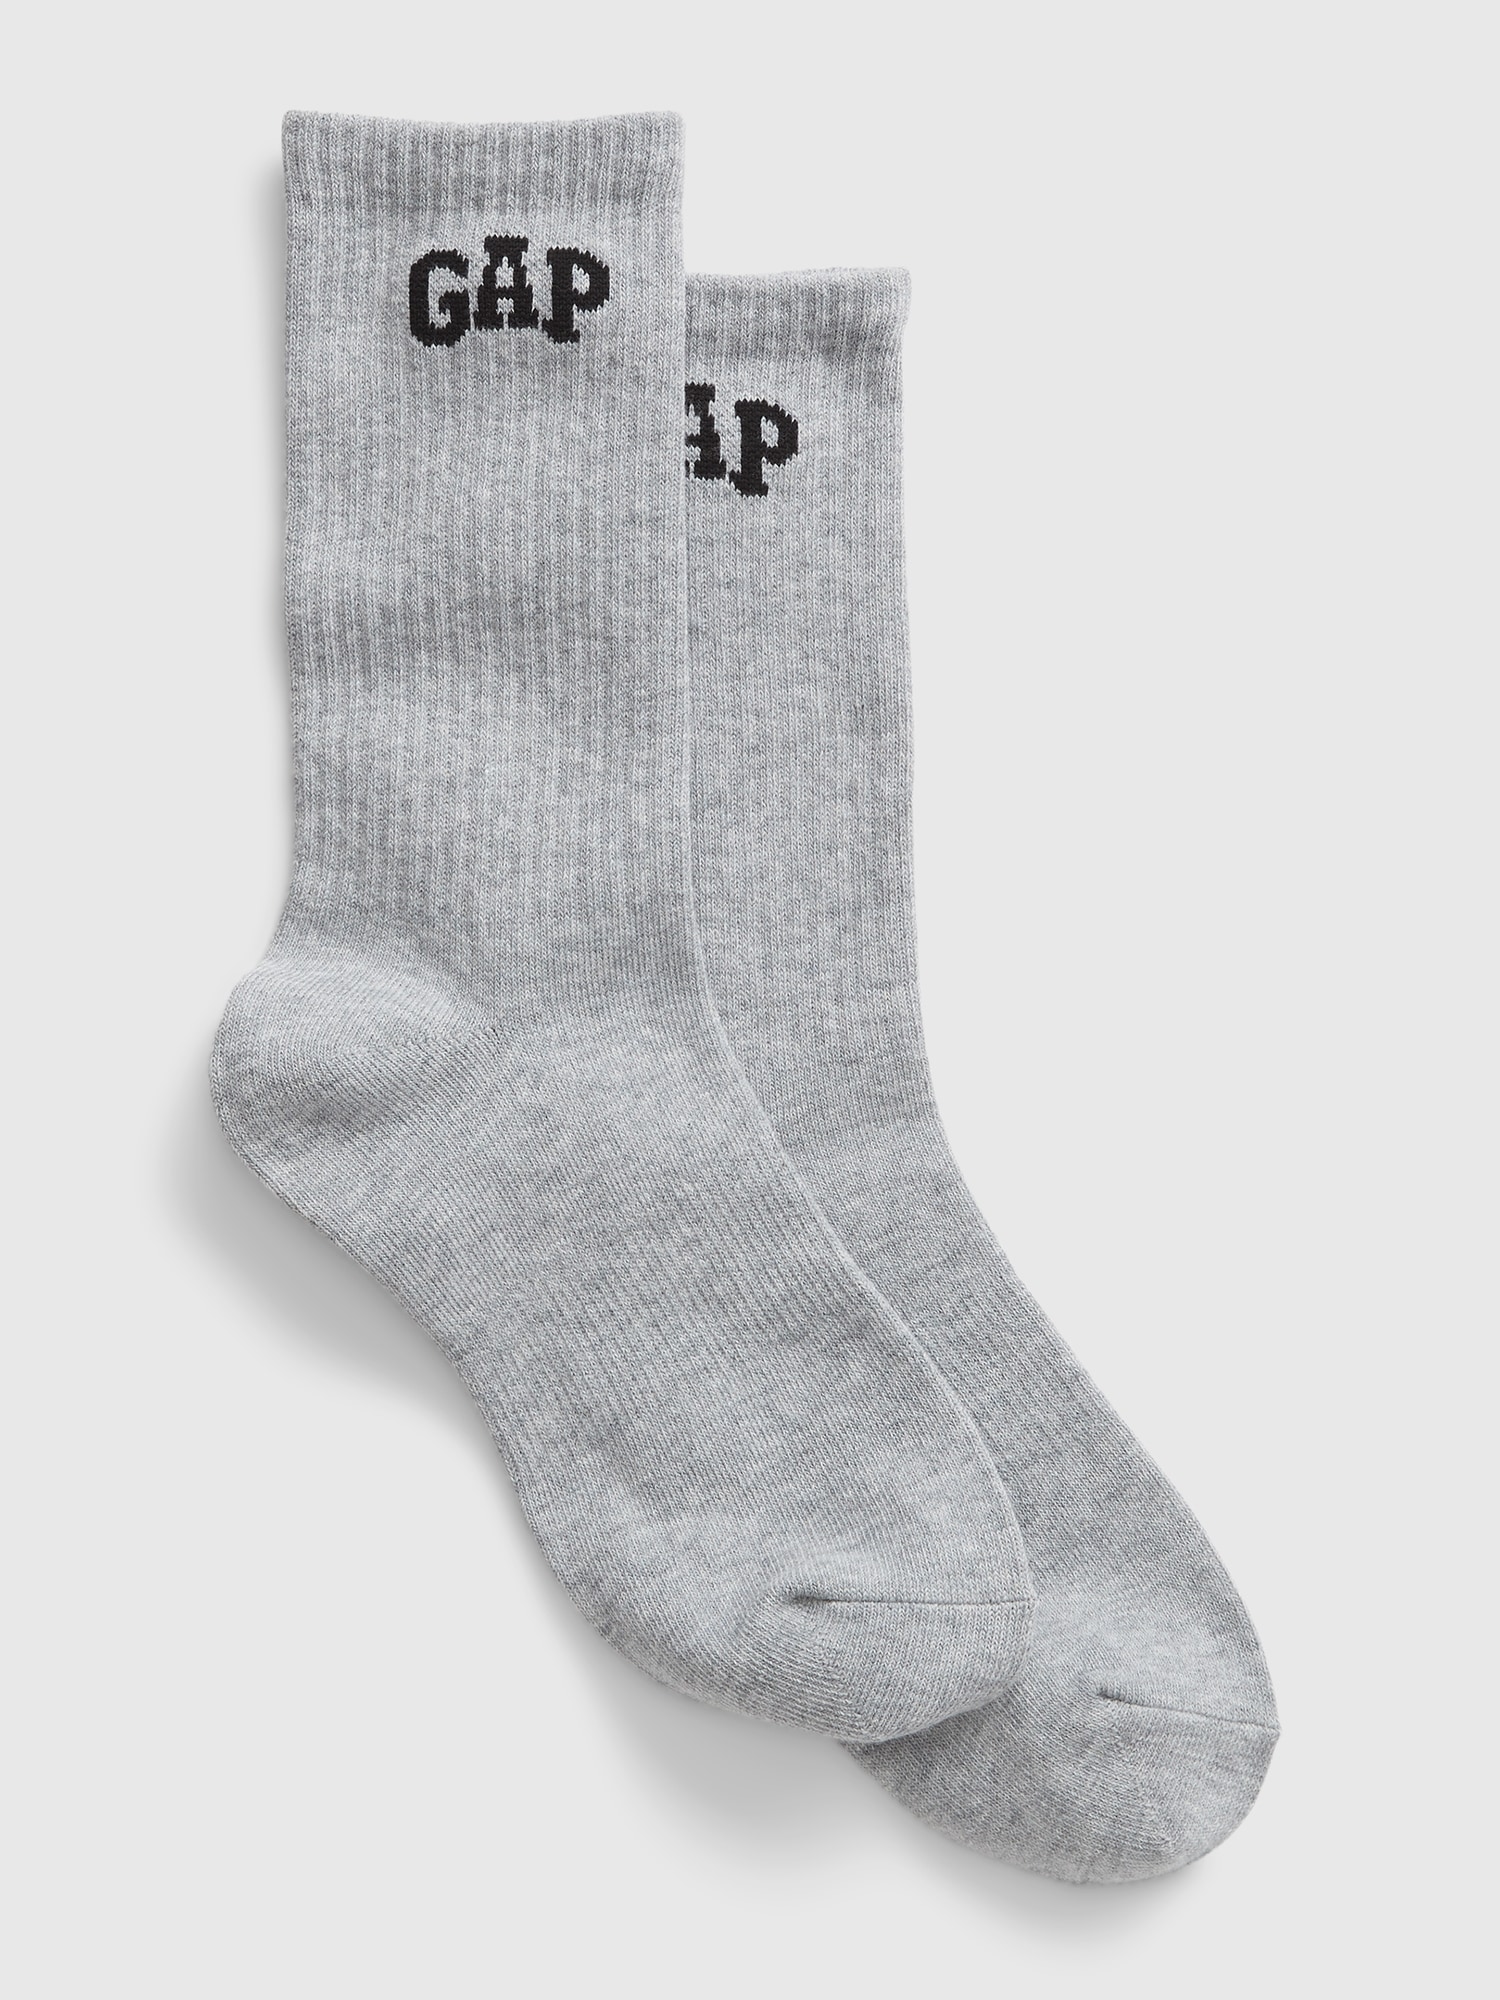 Gap Logo Quarter Crew Athletic Socks | Gap